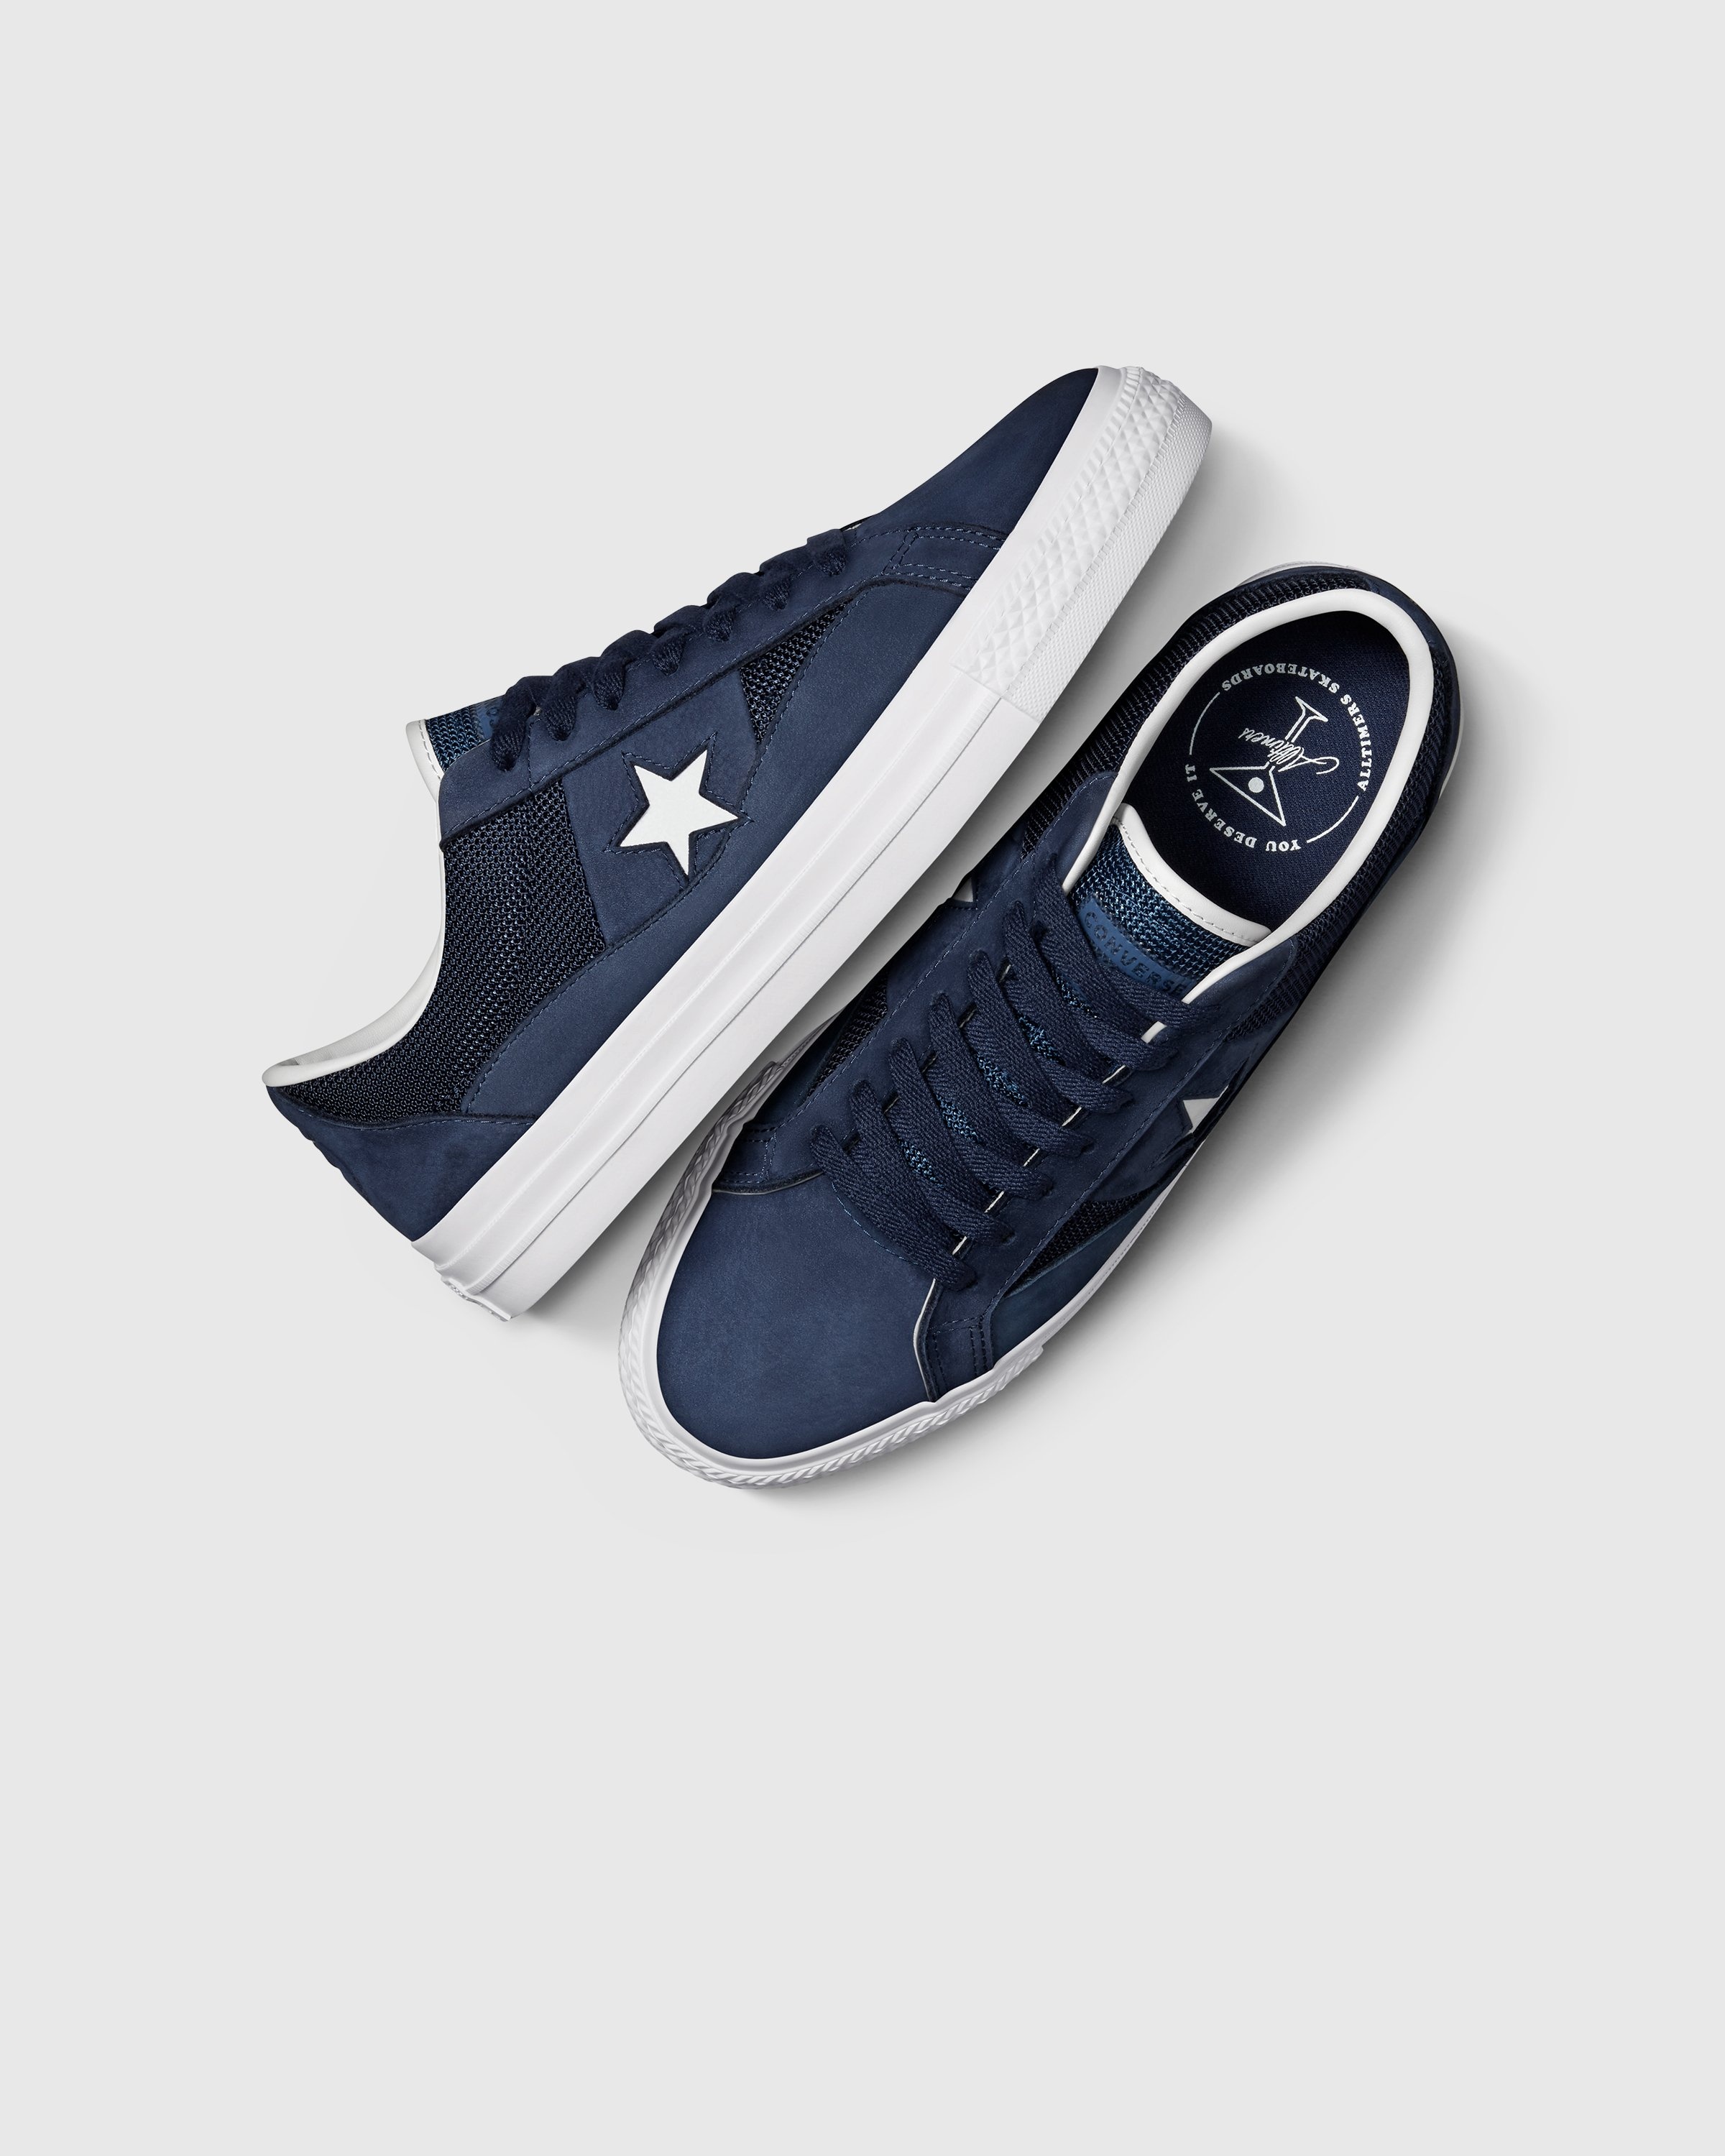 Converse – CONS Alltimers ONE STAR OX Navy/Navy | Highsnobiety Shop